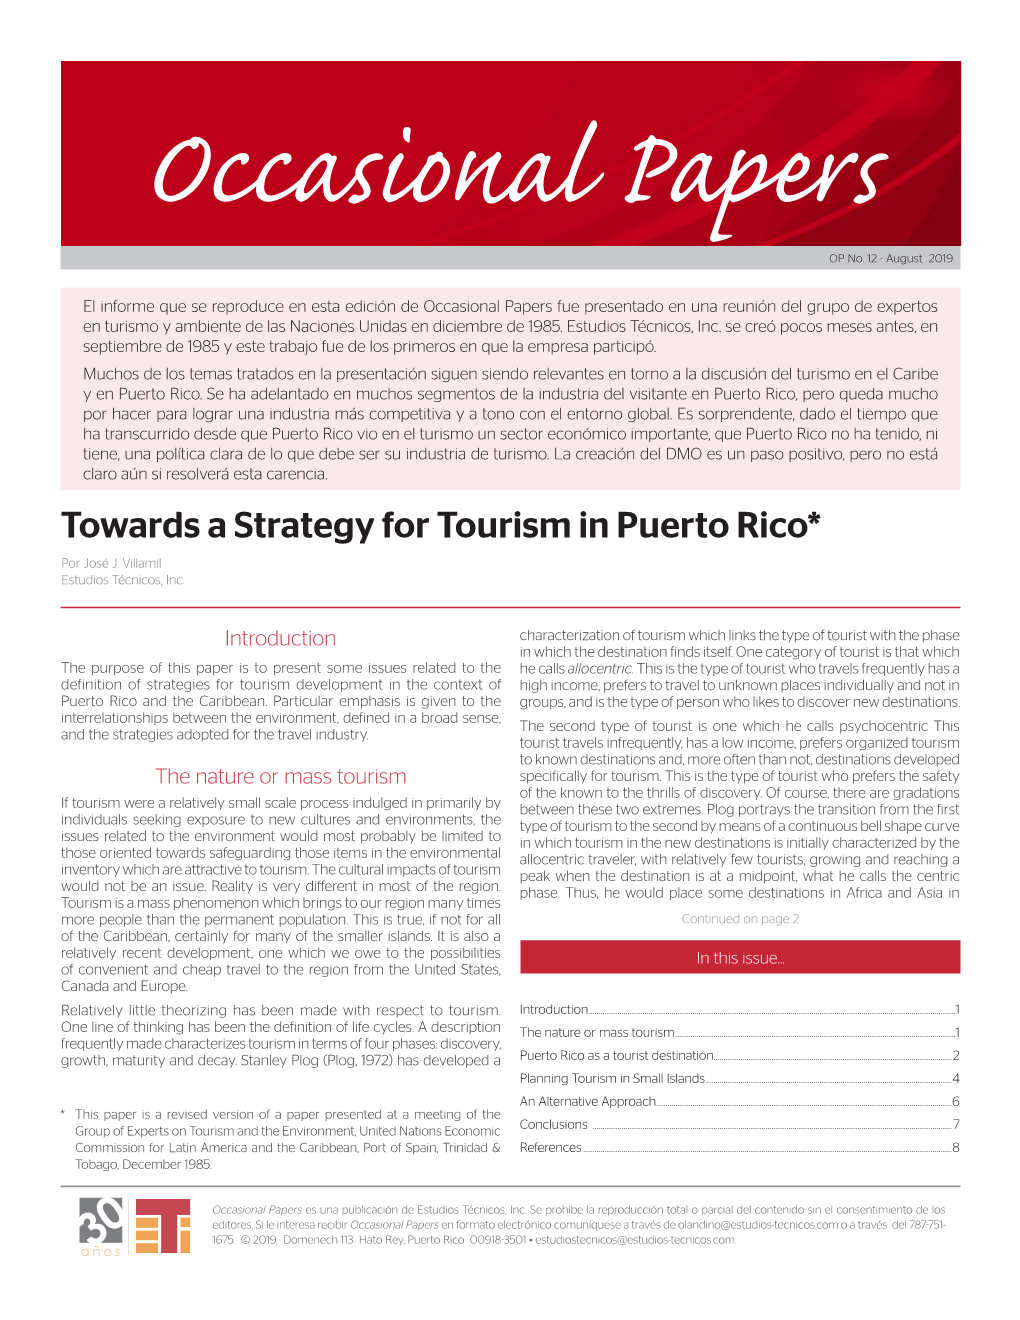 Towards a Strategy for Tourism in Puerto Rico* Por José J